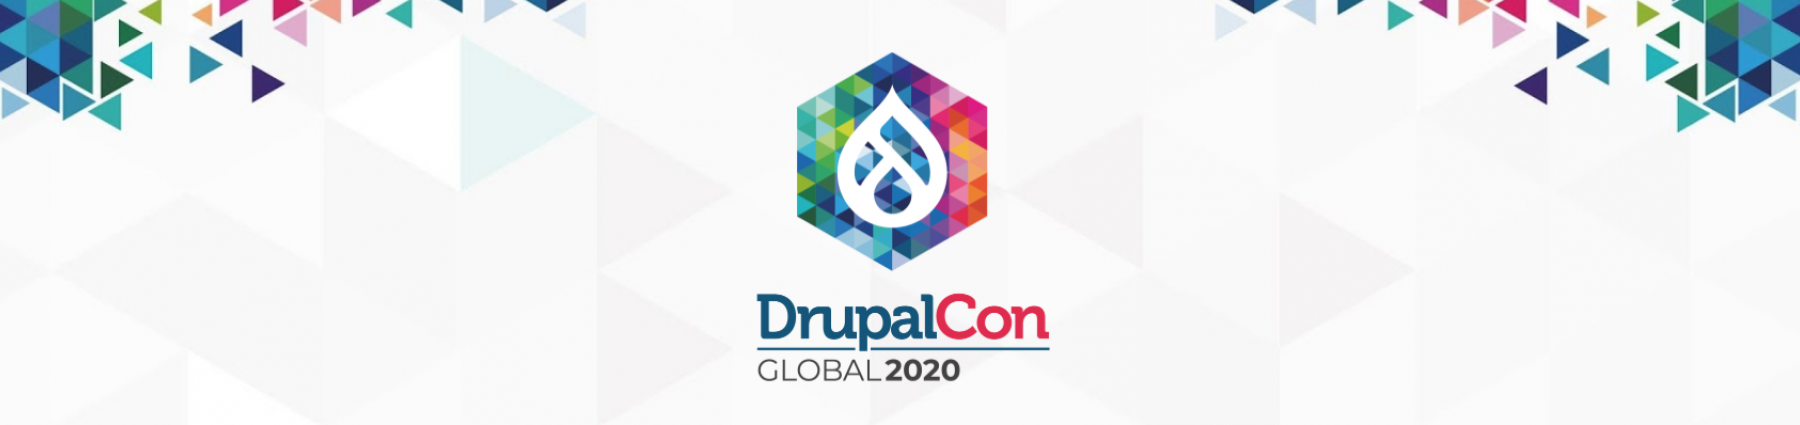 Drupalcon Global 2020